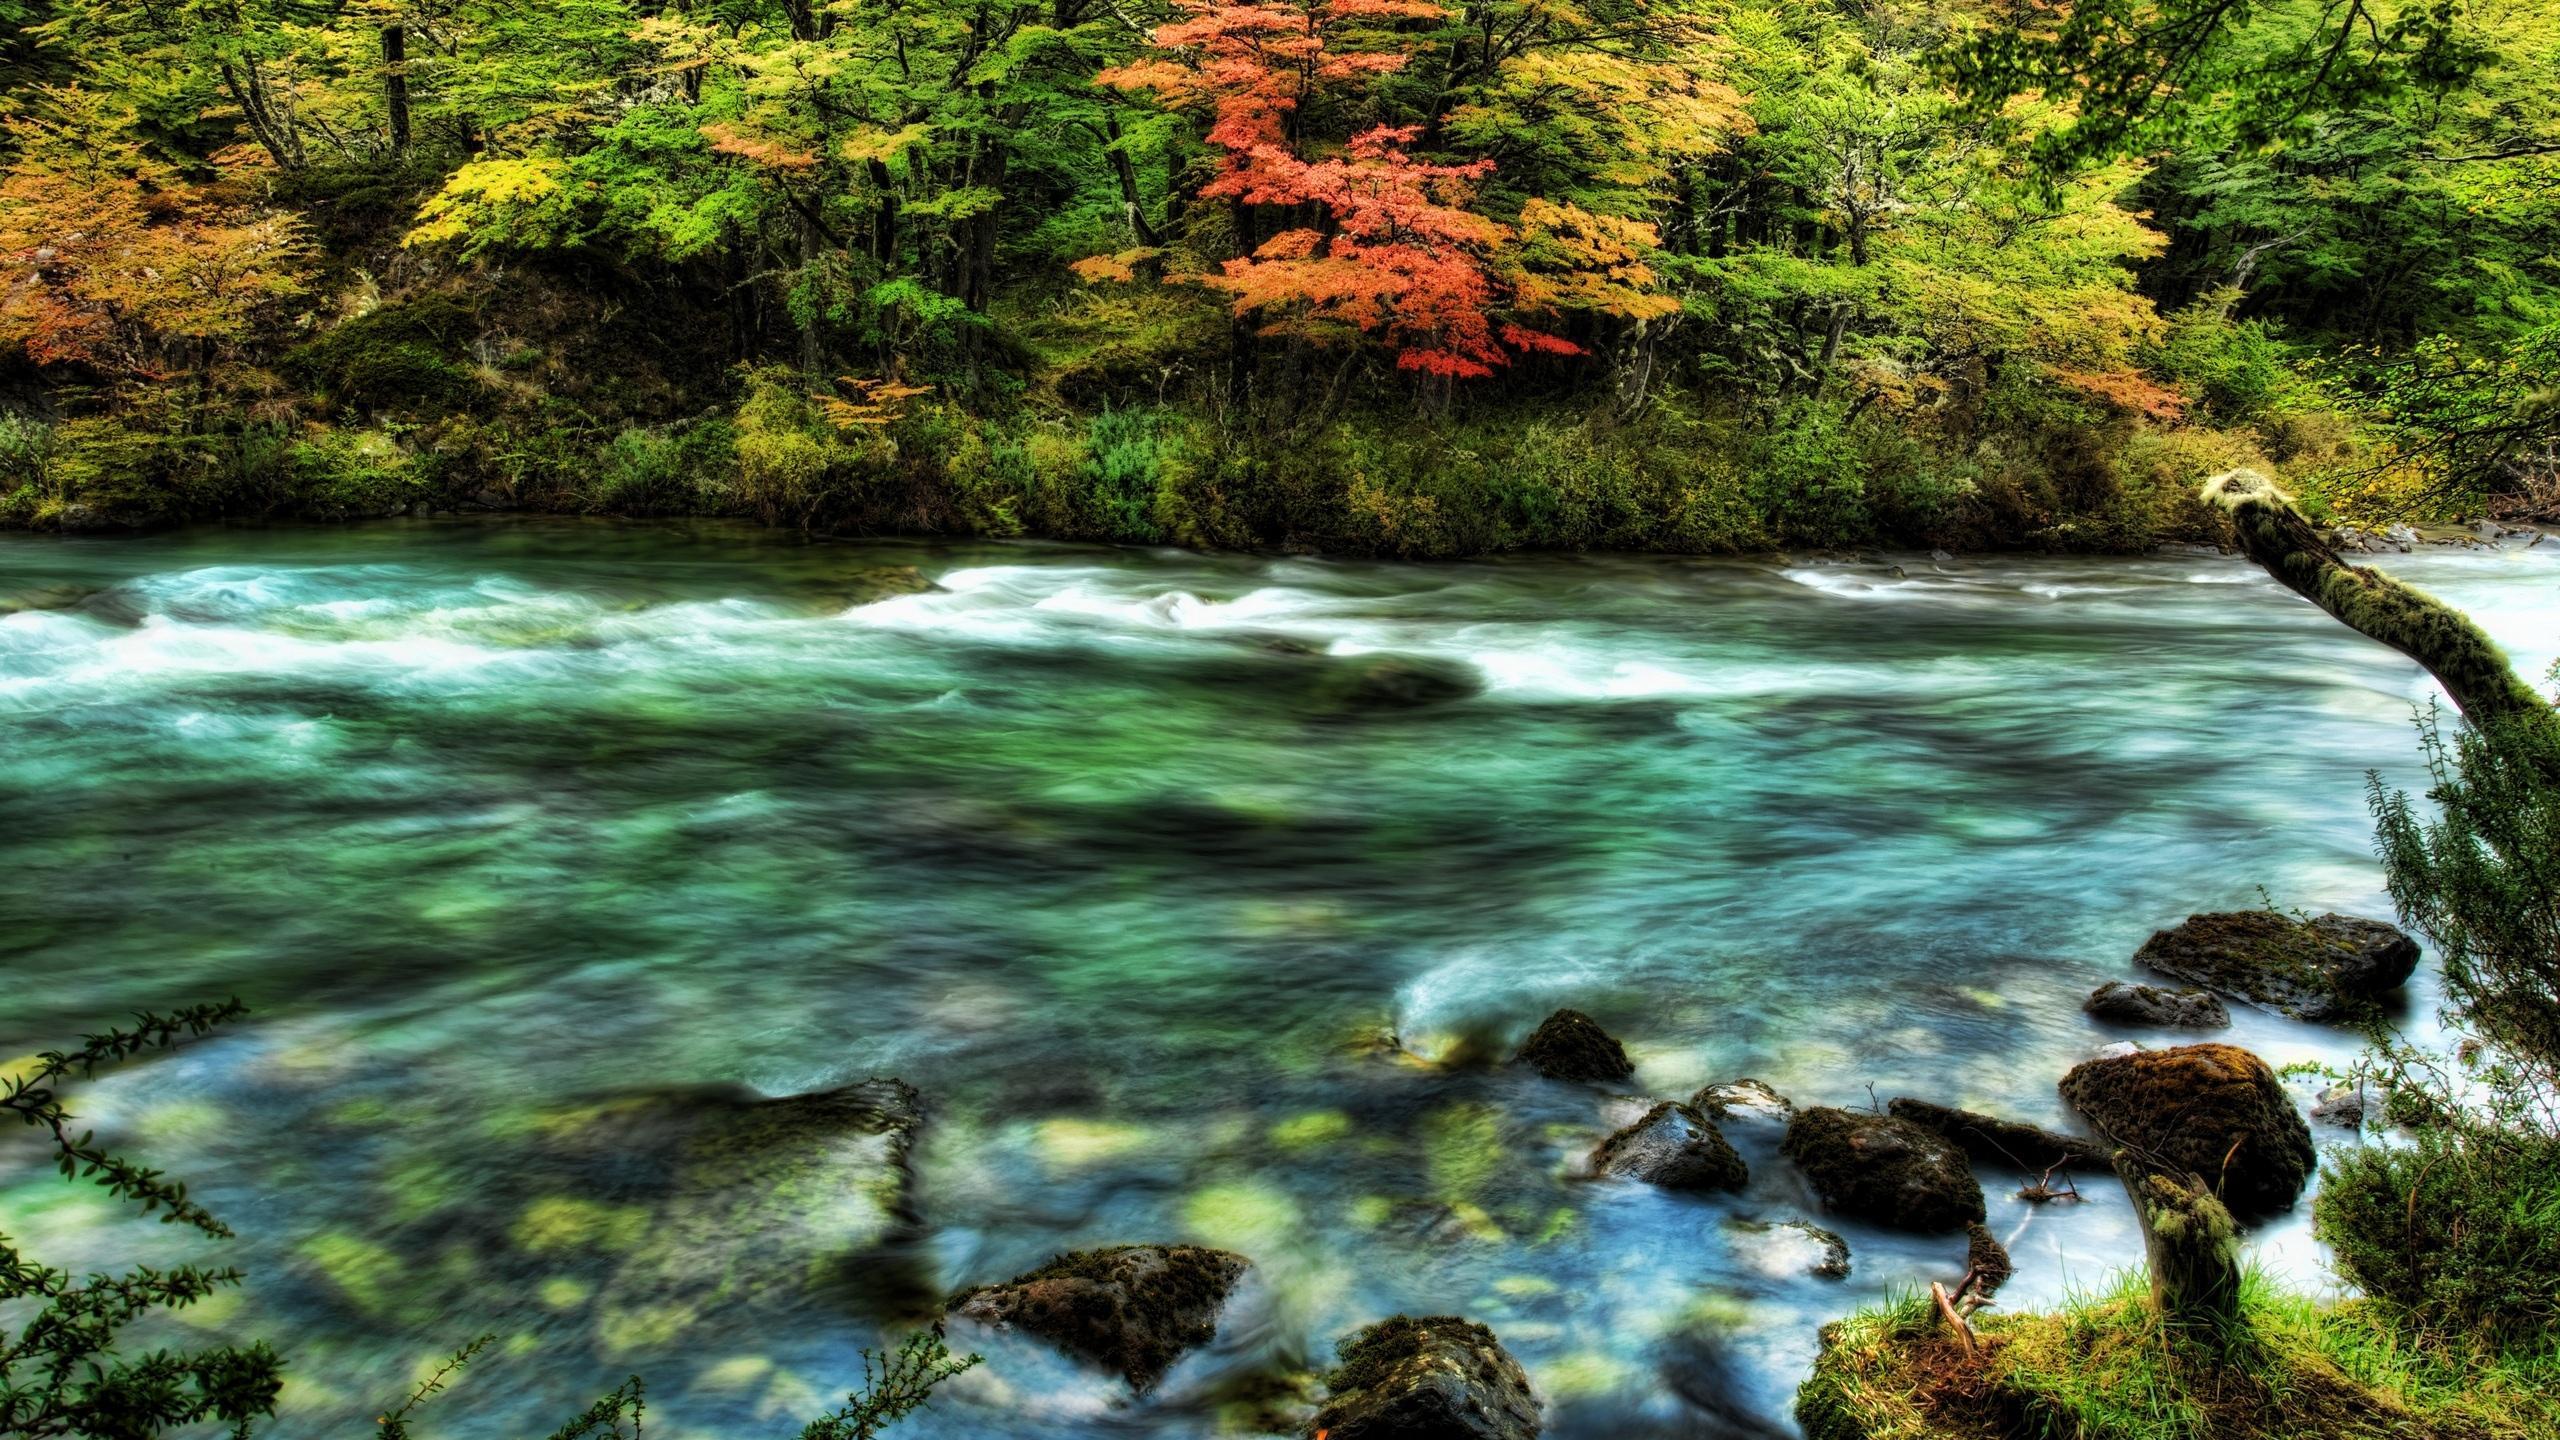 Download wallpaper 2560x1440 river, wood, stream, colors, stones